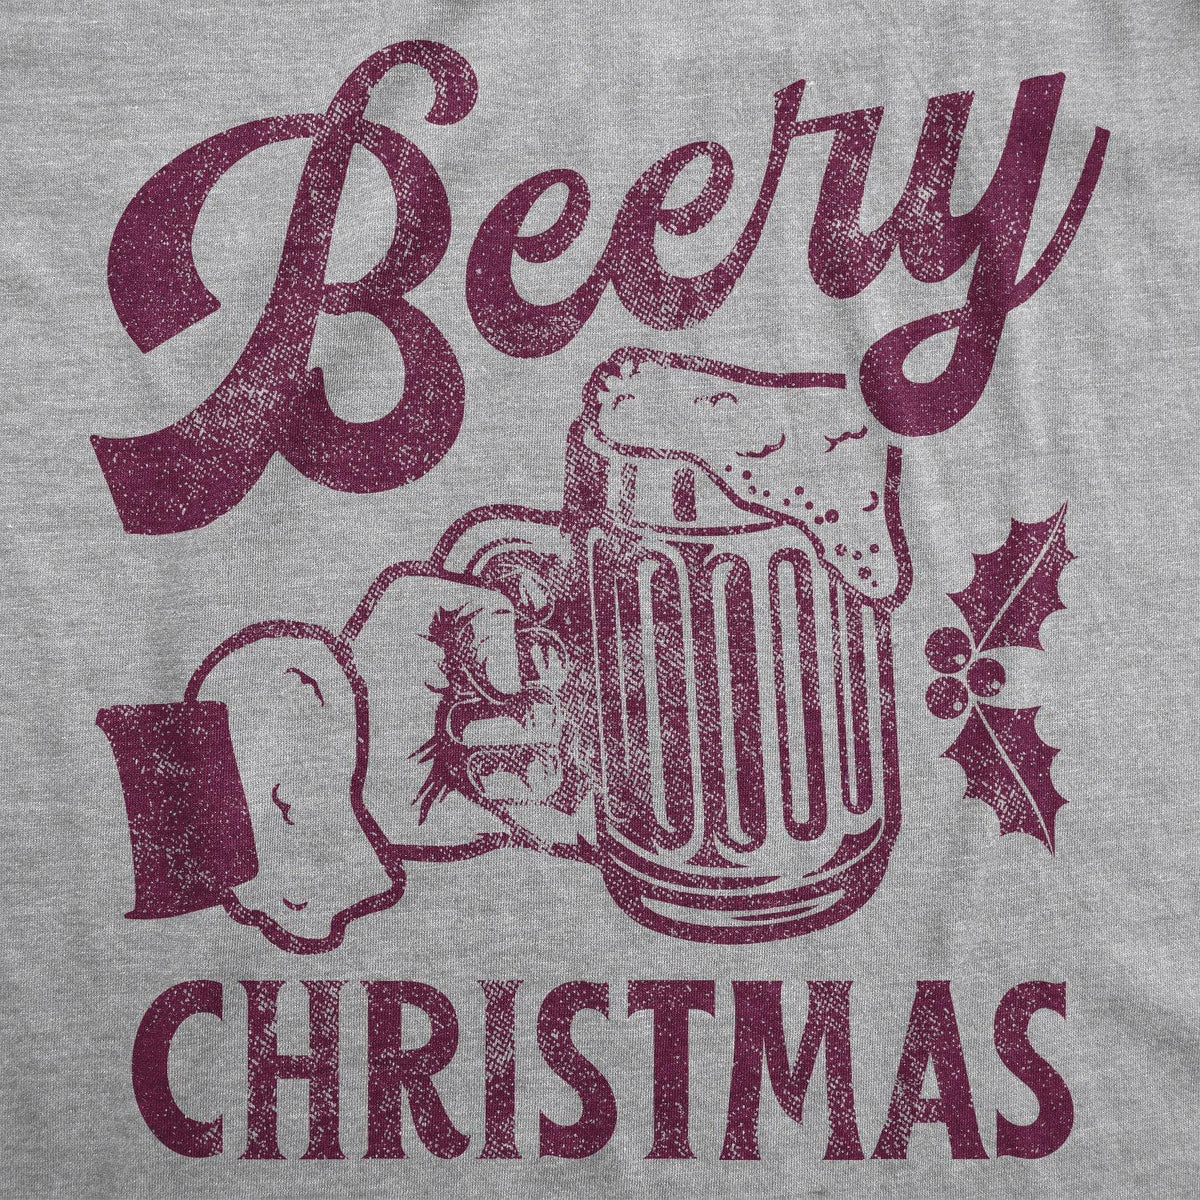 Beery Christmas Men&#39;s Tshirt - Crazy Dog T-Shirts